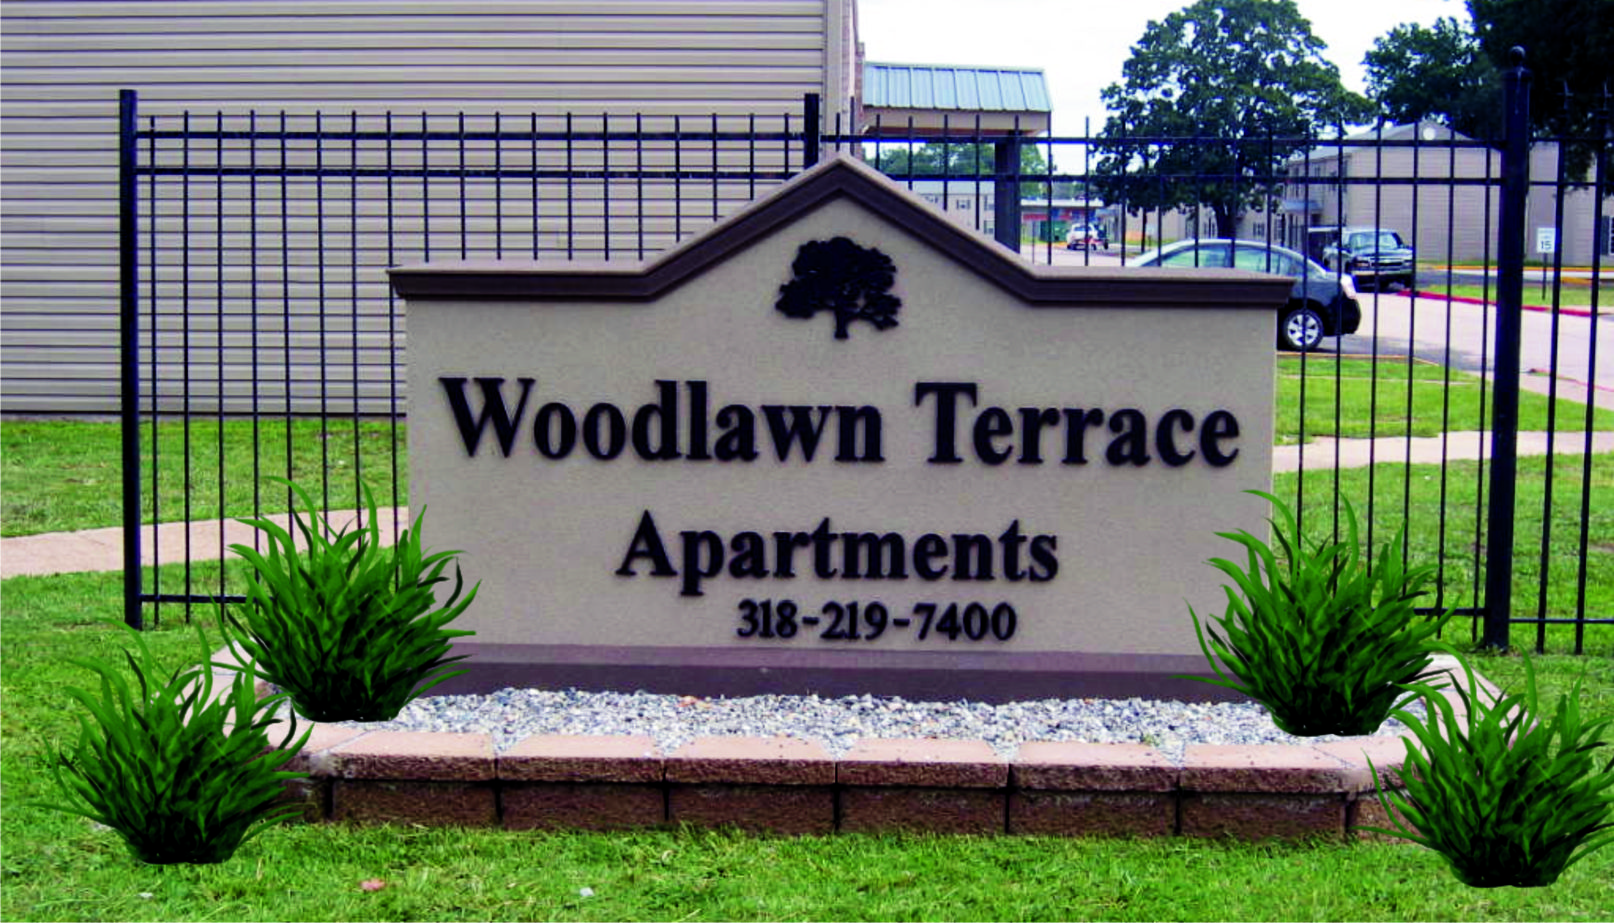 Woodlawn_Terrace.JPG